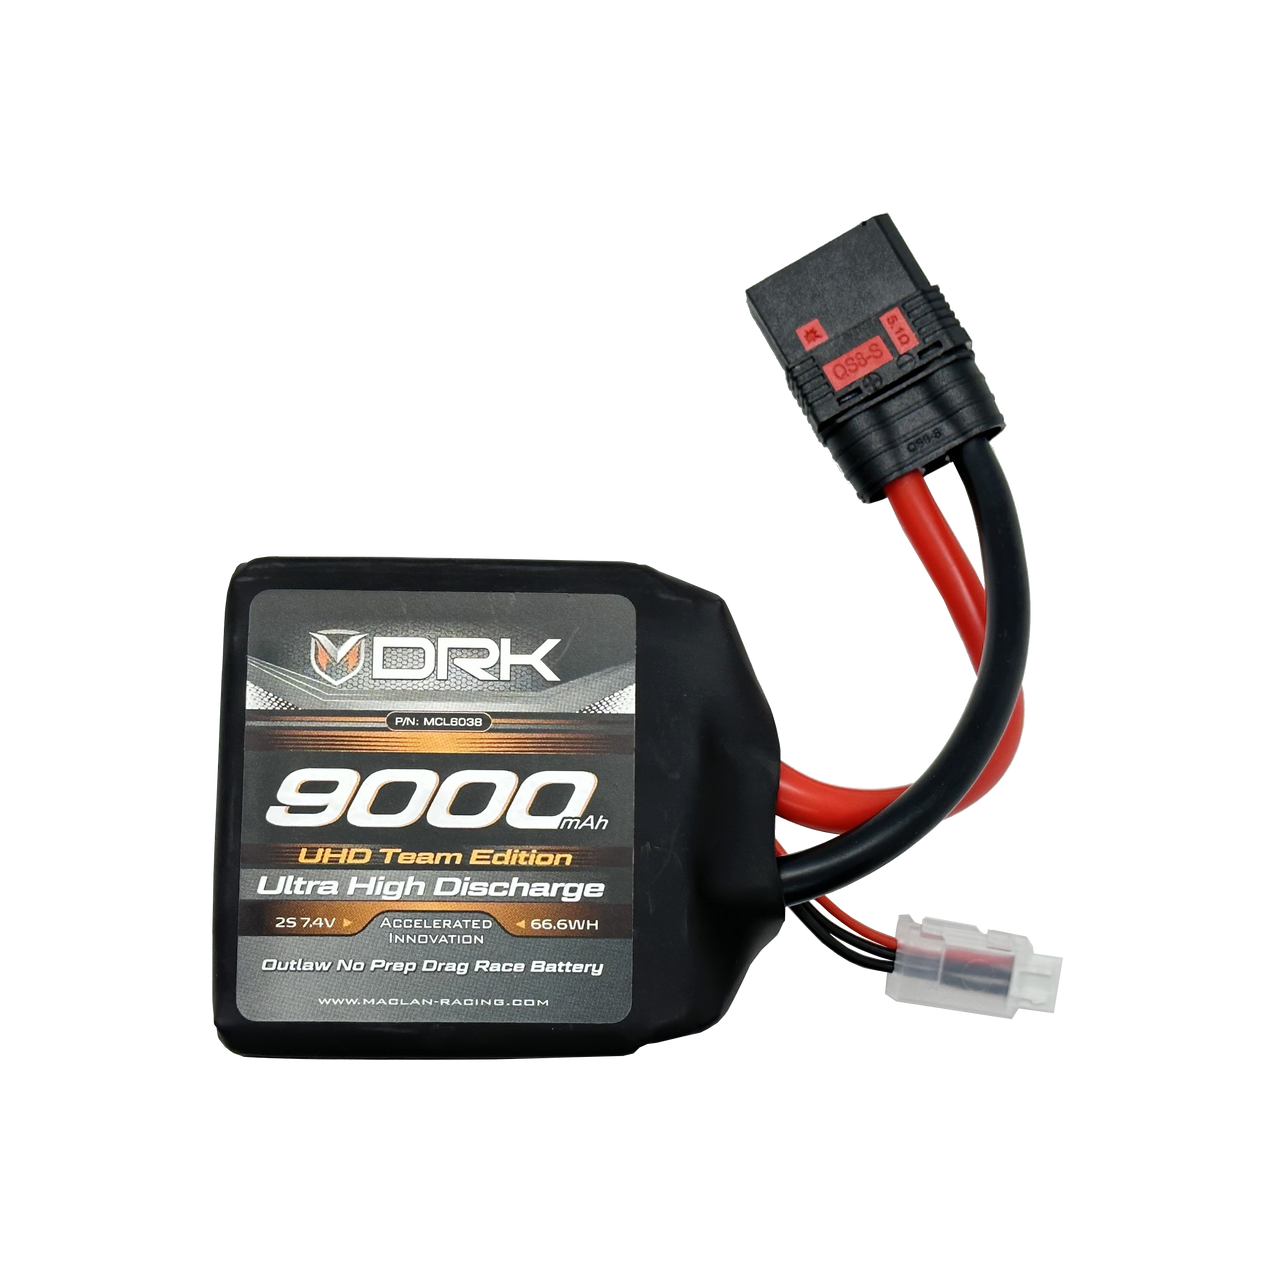 DRK 9000mAh UHD (Ultra High Discharge) Team Edition Drag Battery